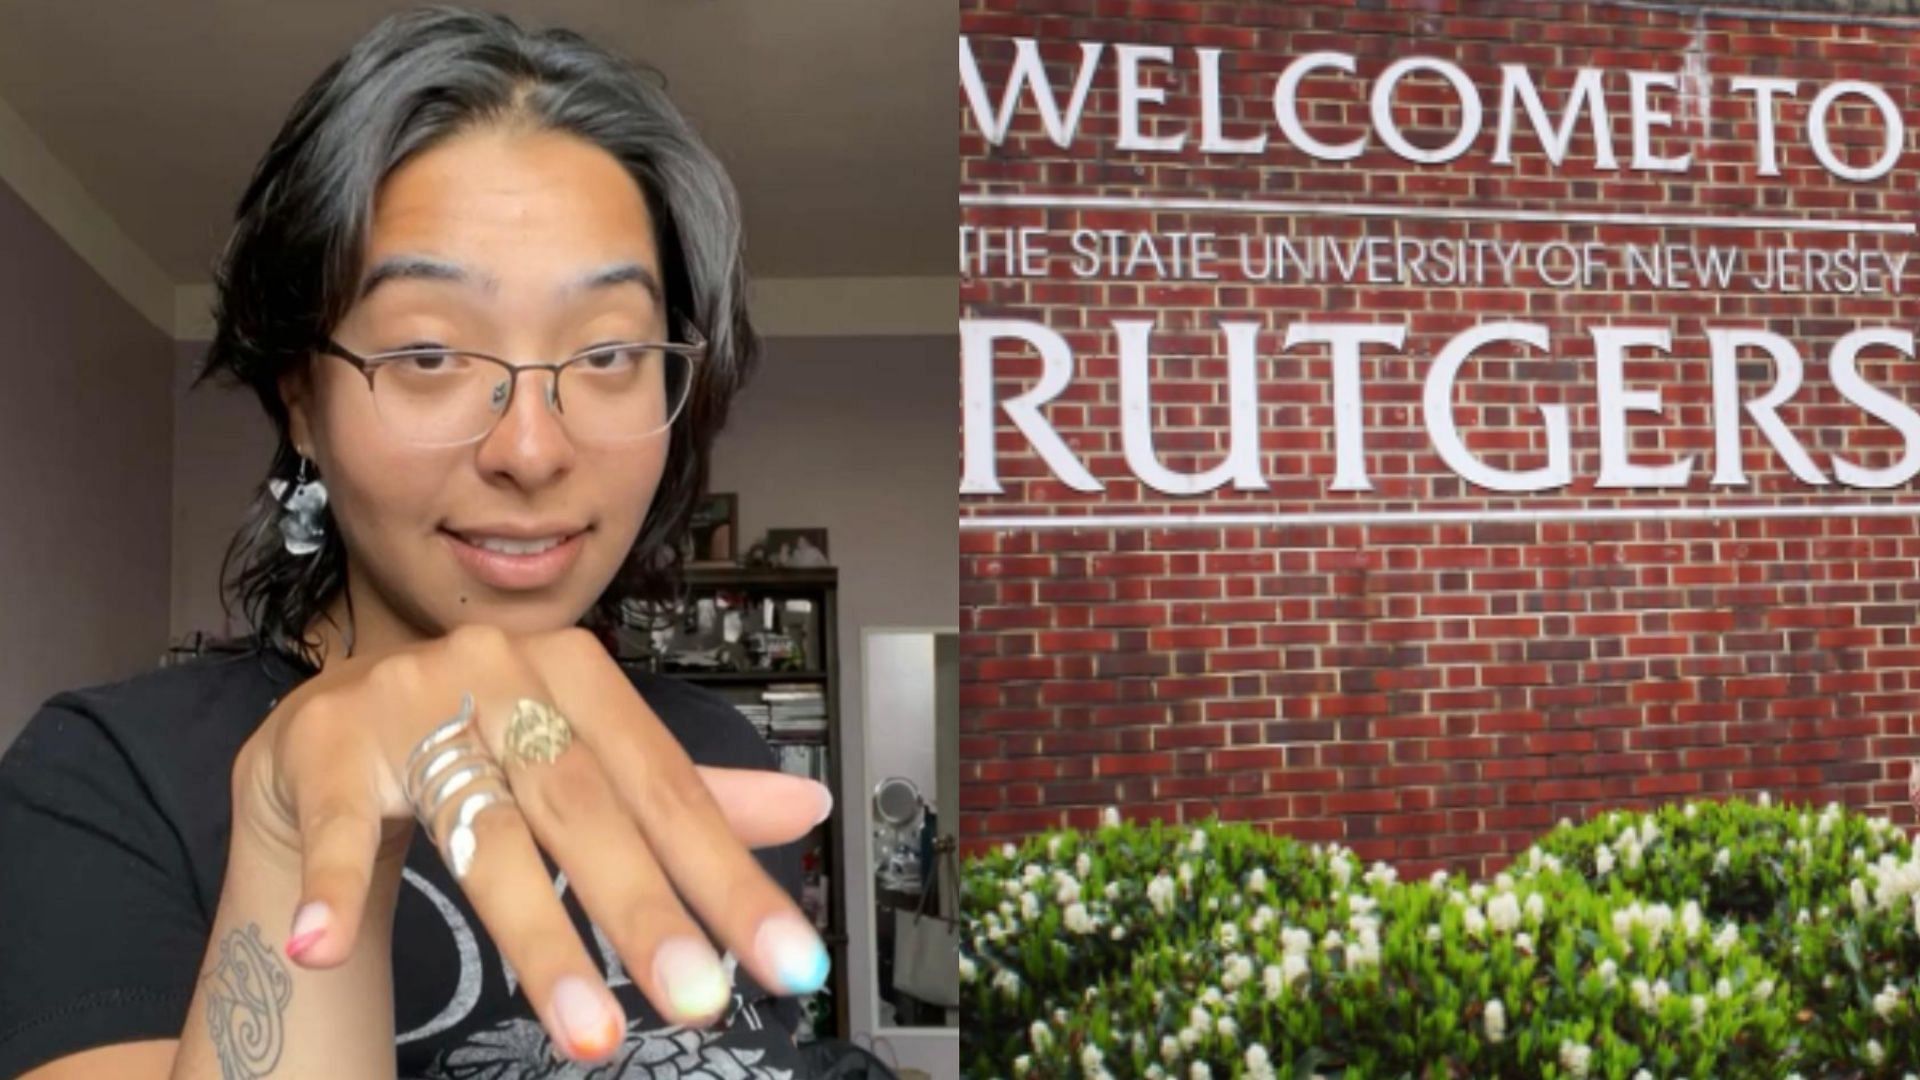 Lucia Mendoza is a student of Rutgers University. (Image via Facebook/Lucia Mendoza/Rutgers University)